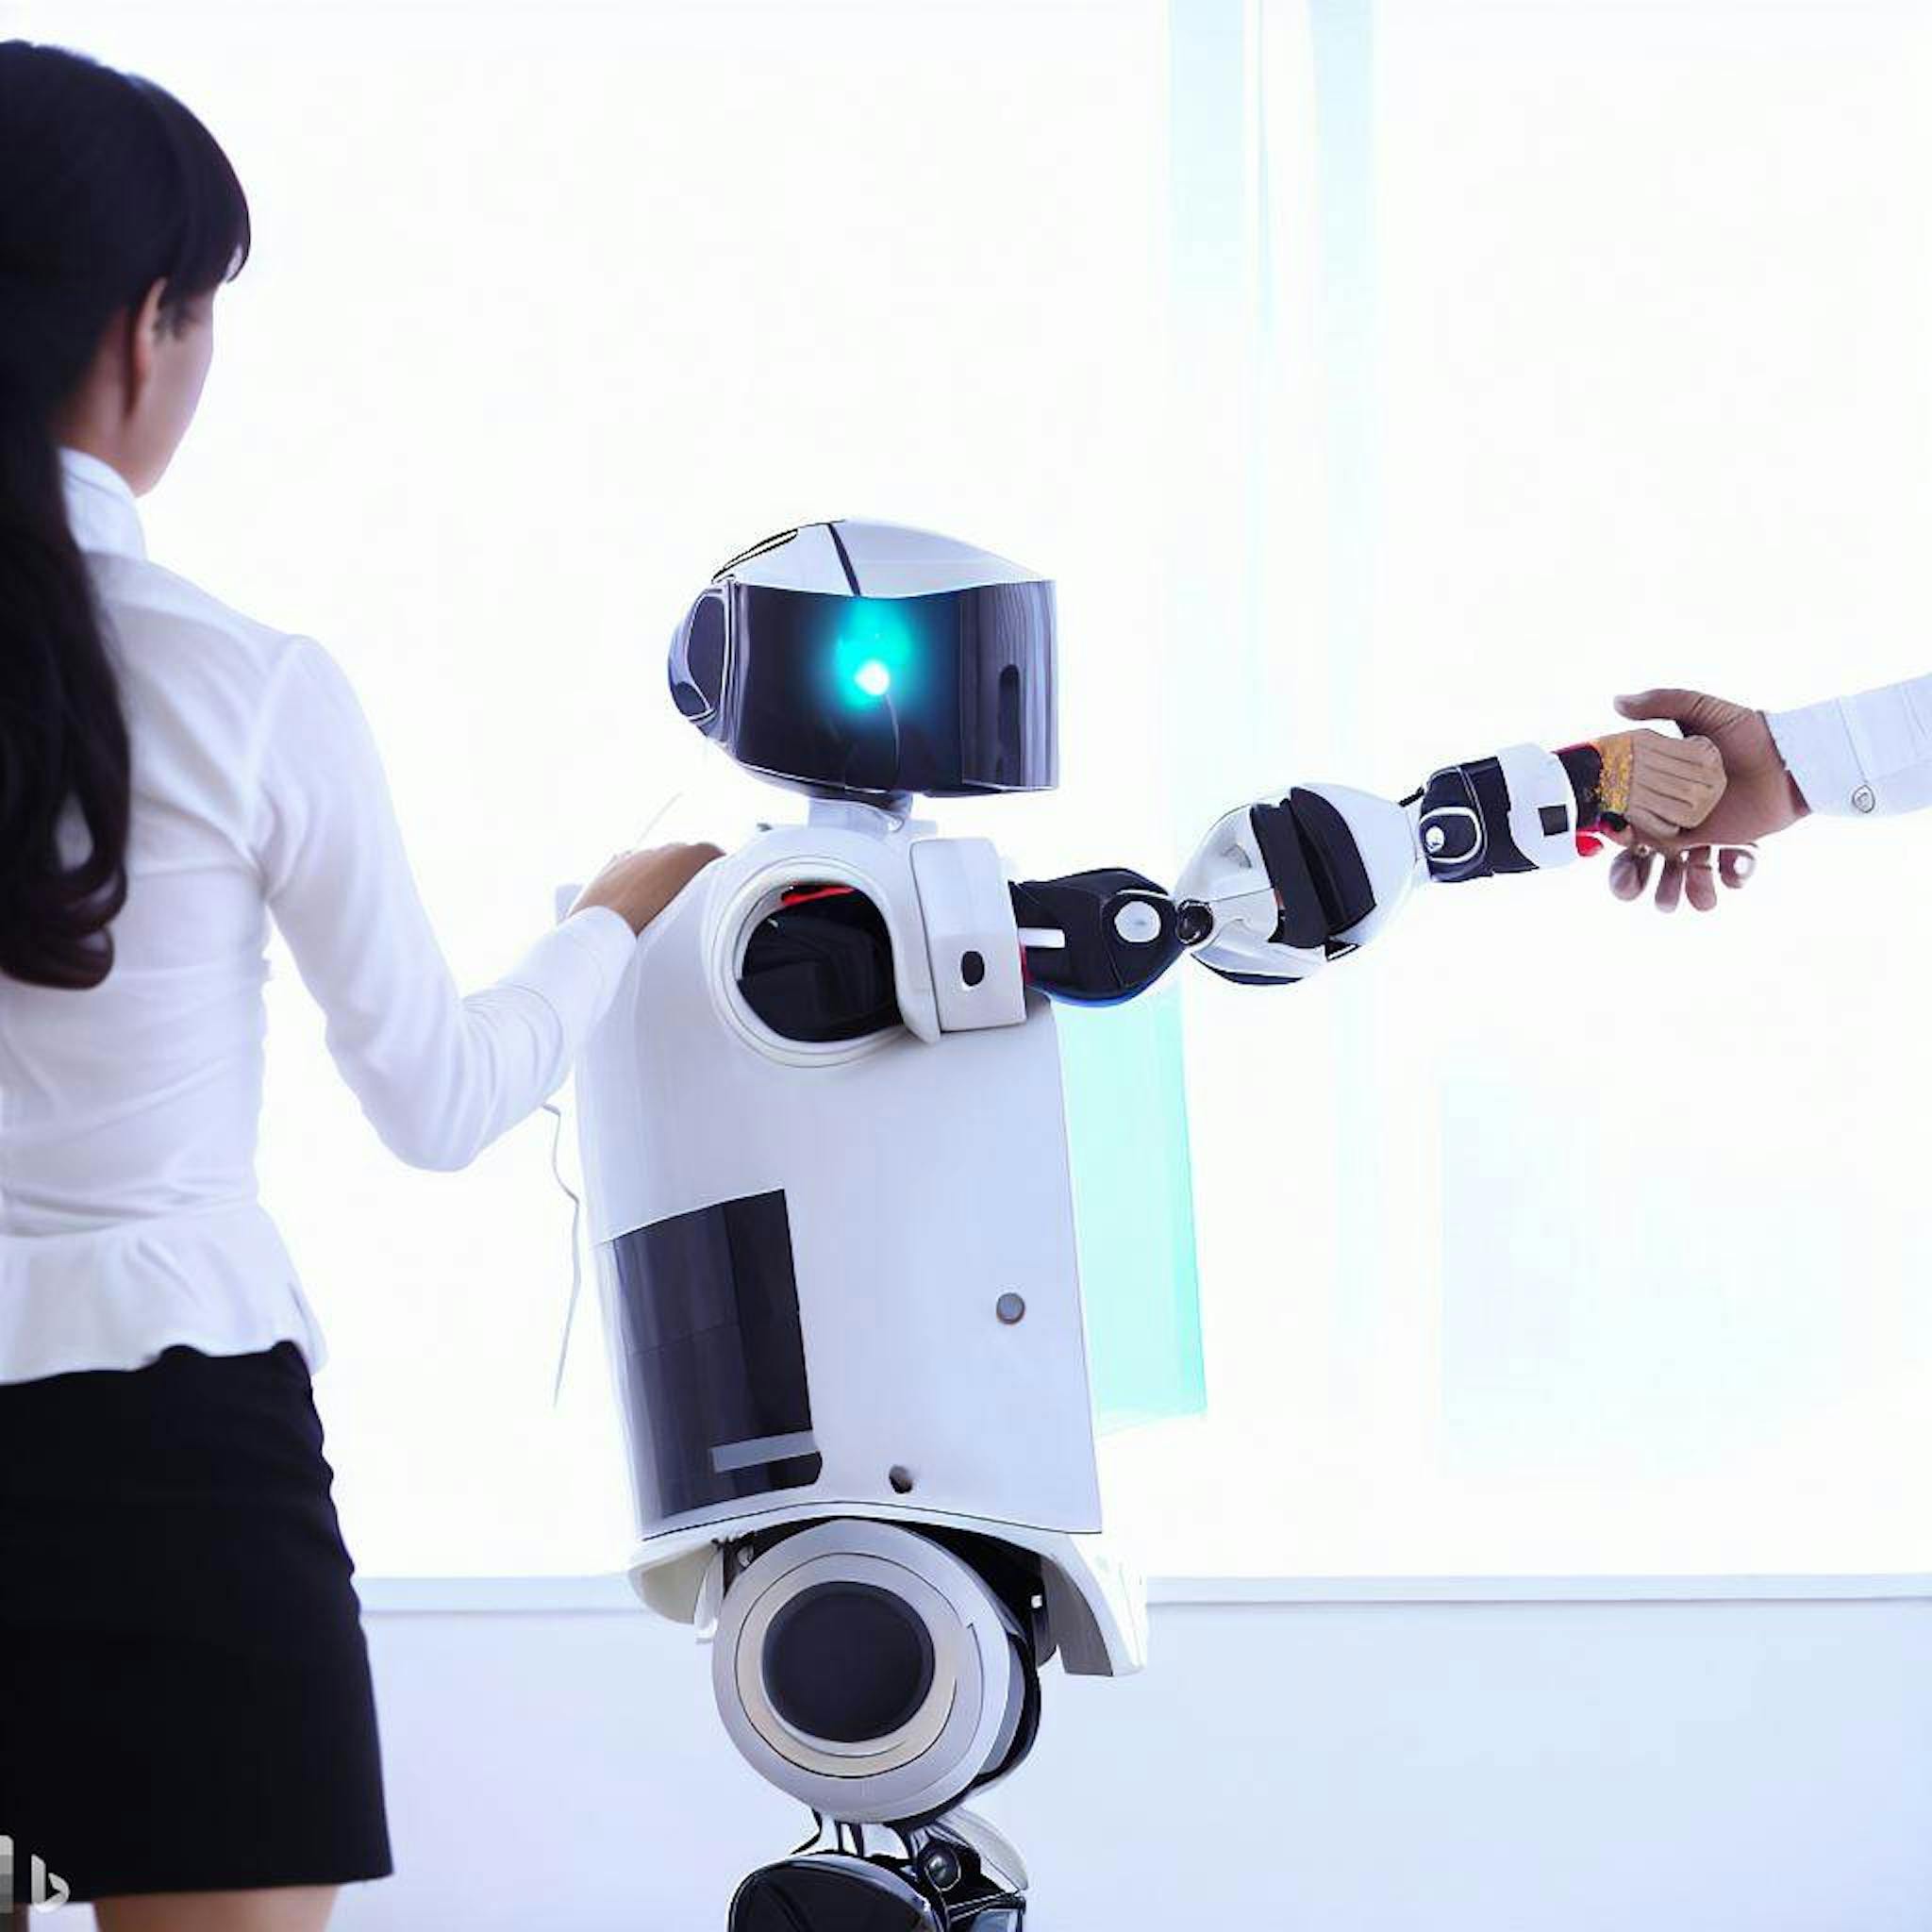  Robot Assisting Humans